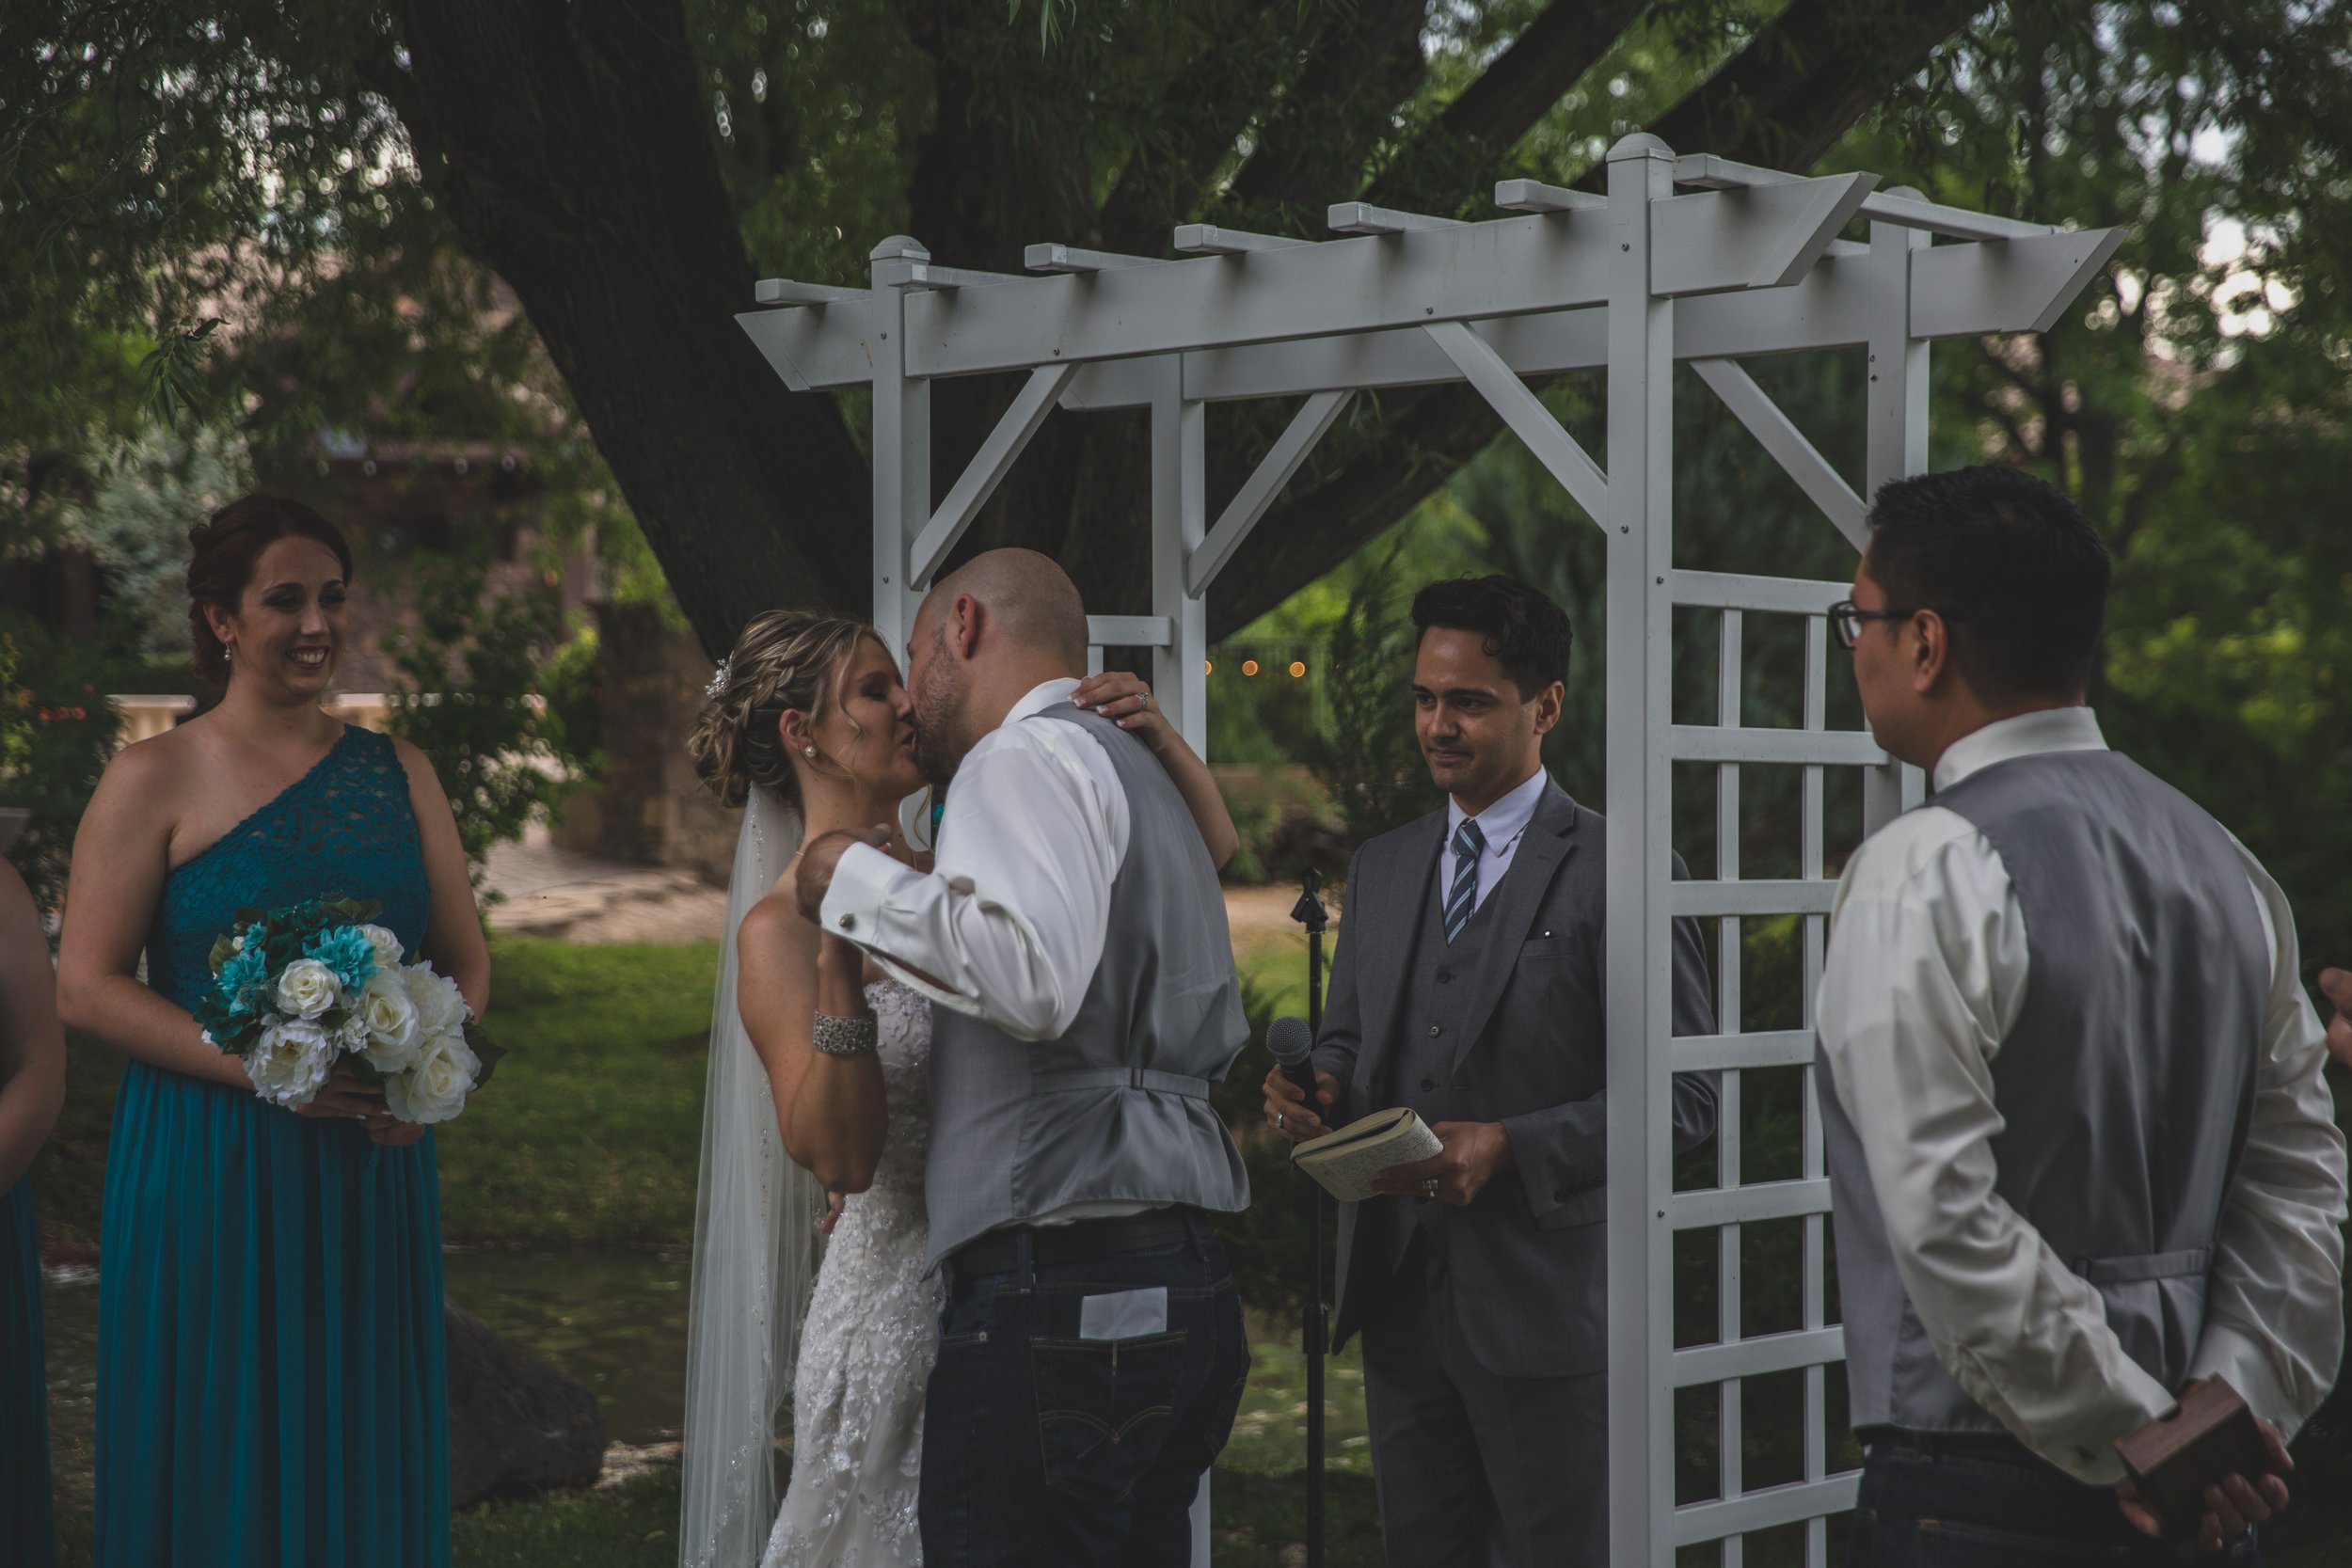  Bride and Groom share first kiss at Arizona wedding by Northern Arizona Wedding Photographer, Jennifer Lind Schutsky.  